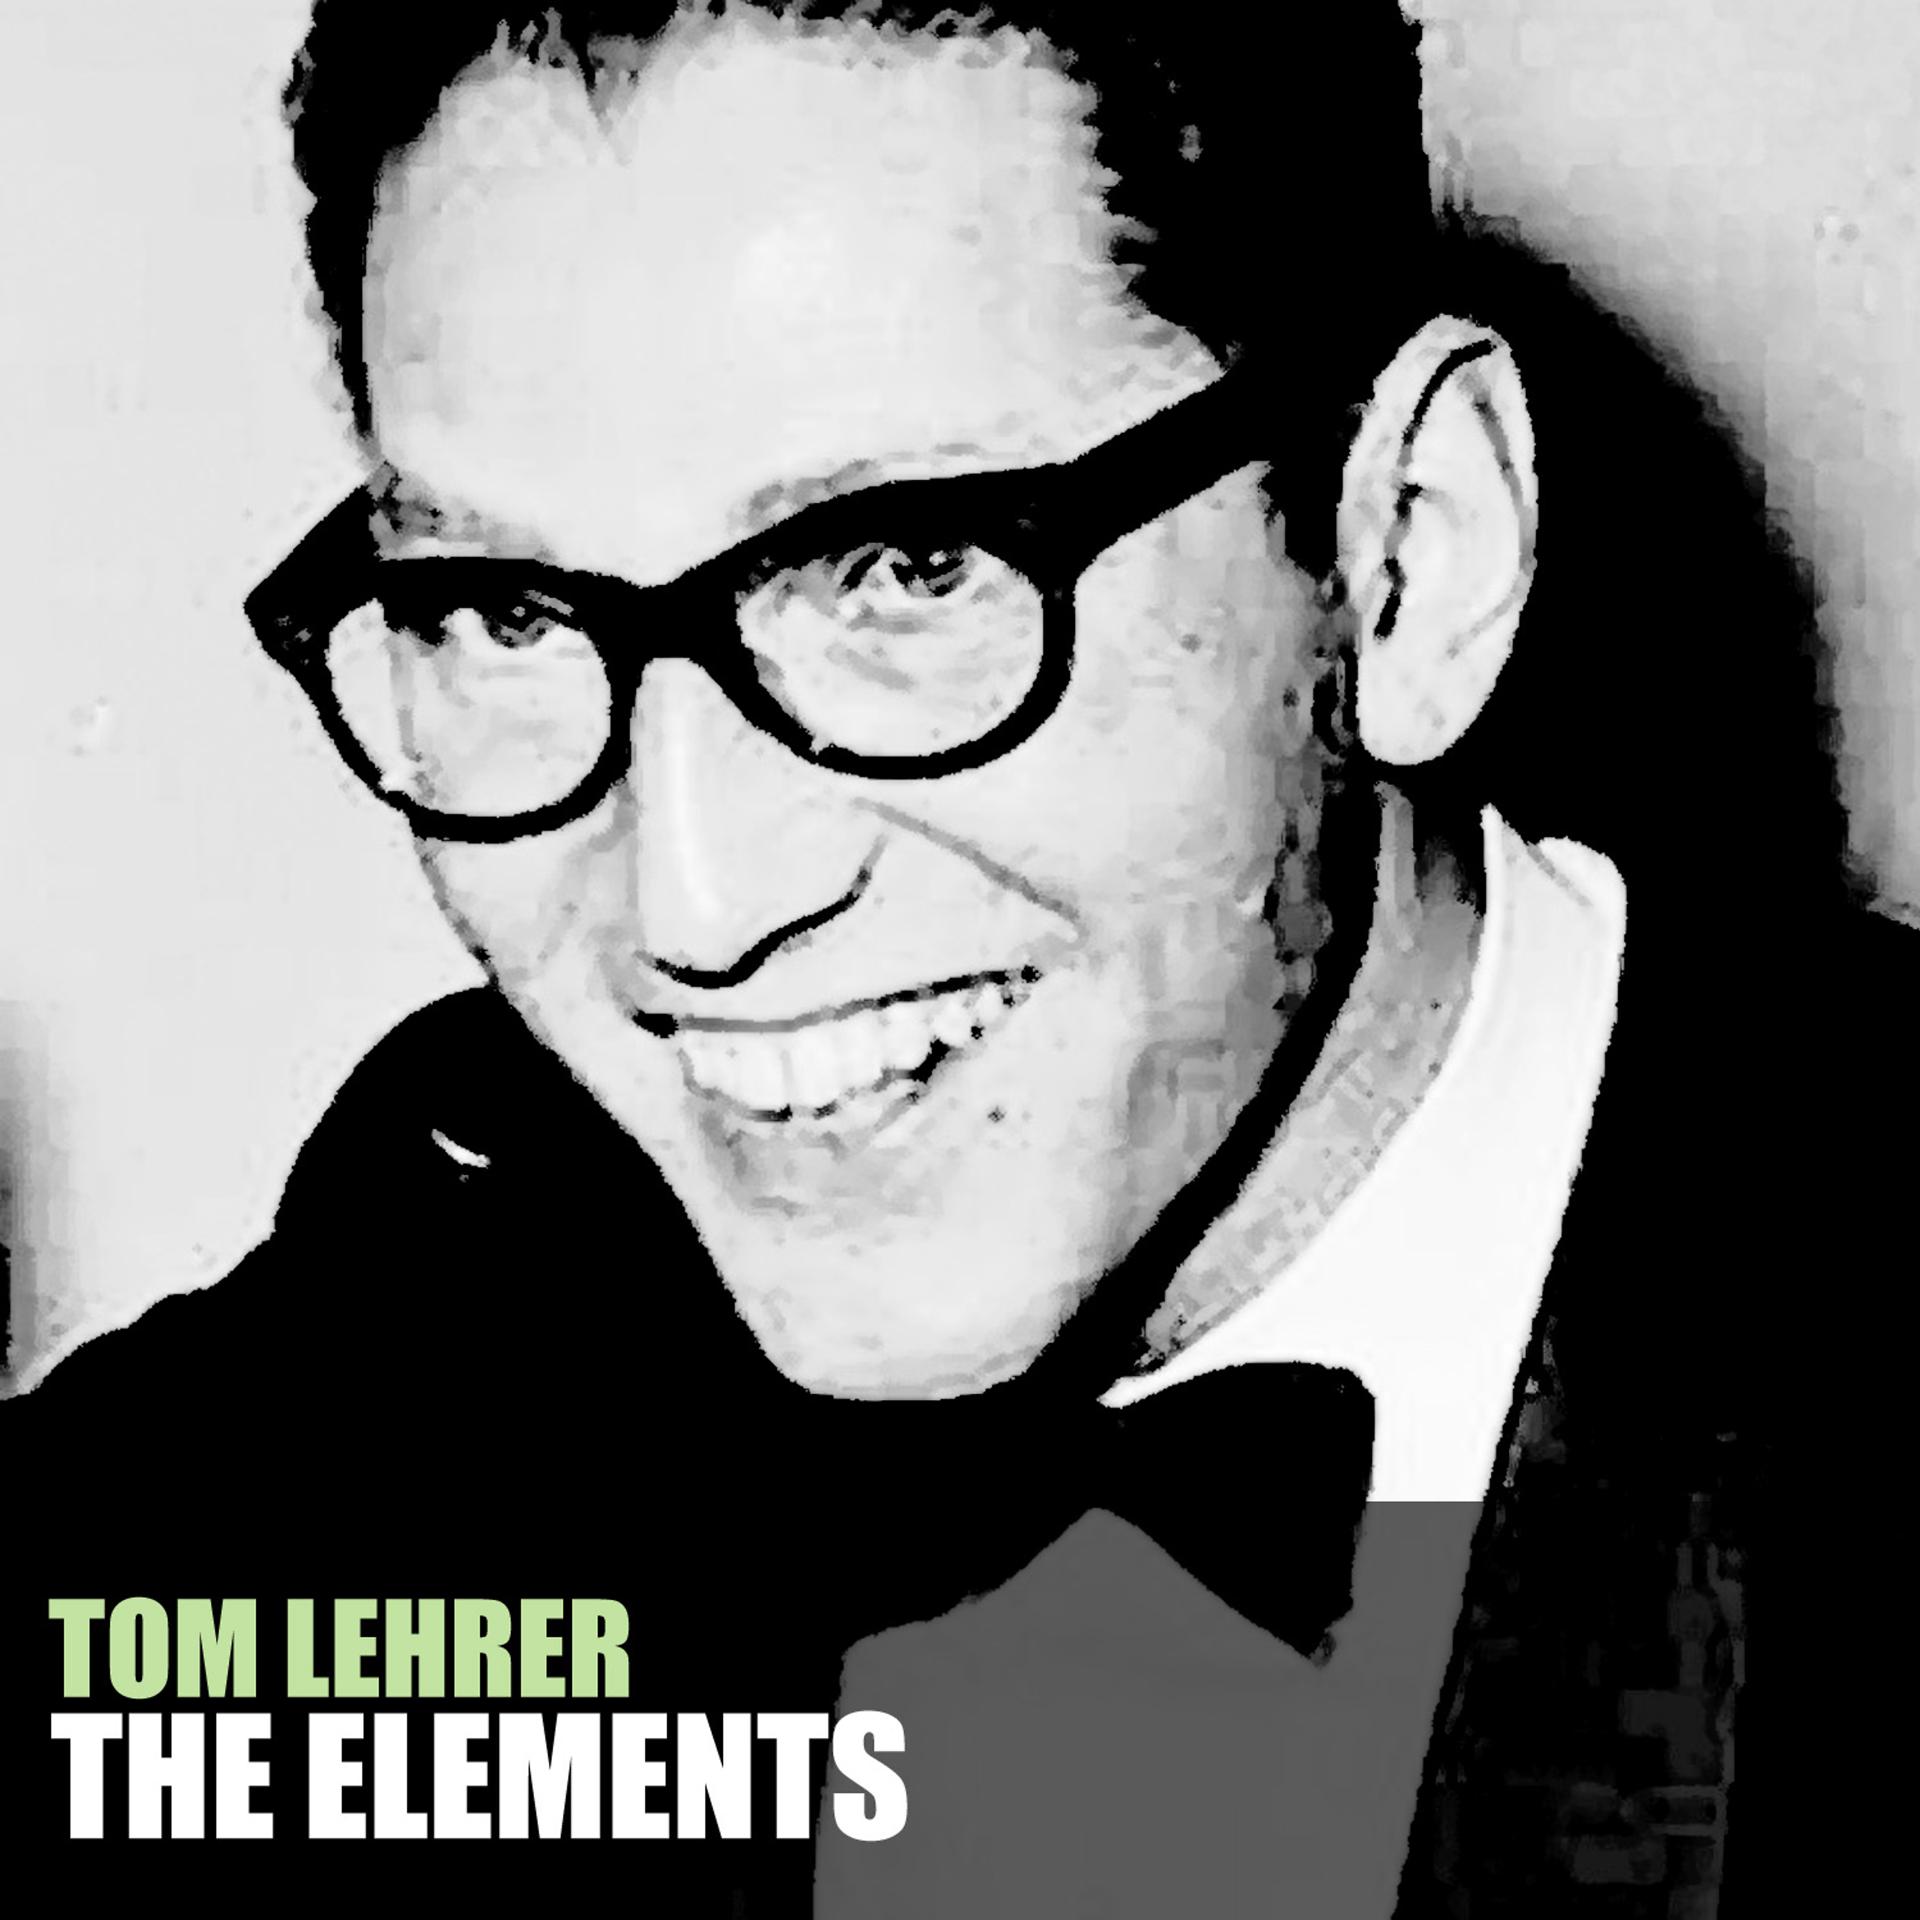 Tom lehrer. Том Лерер. The elements том Лерер. Том Лерер композитор. The masochism Tango Tom Lehrer.